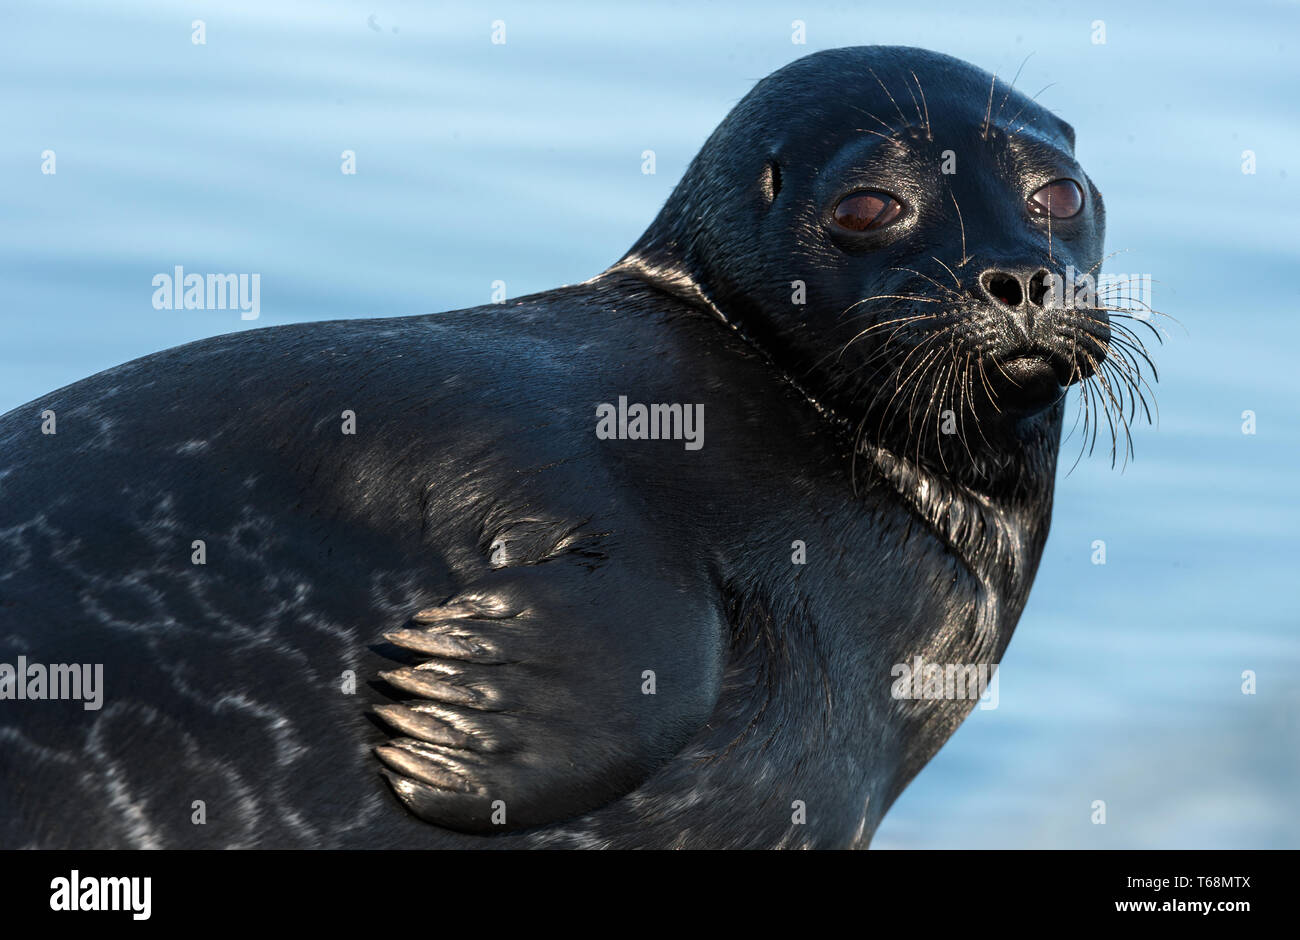 The Ladoga ringed seal.  Closeup portrait. Scientific name: Pusa hispida ladogensis. The Ladoga seal in a natural habitat. Ladoga Lake. Russia Stock Photo